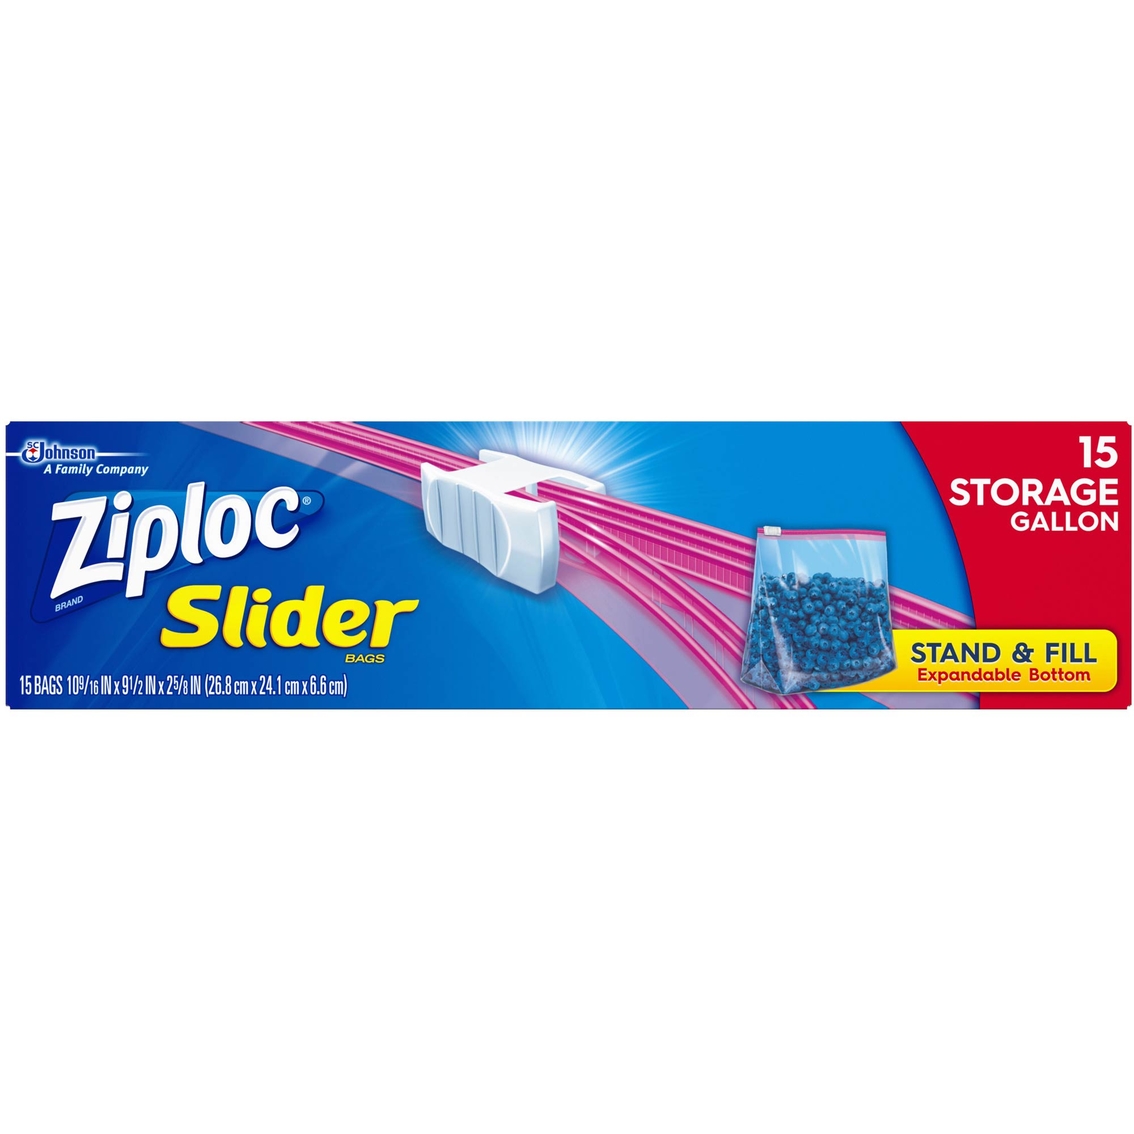 Ziploc Slider Storage Gallon Bags 15 Ct.